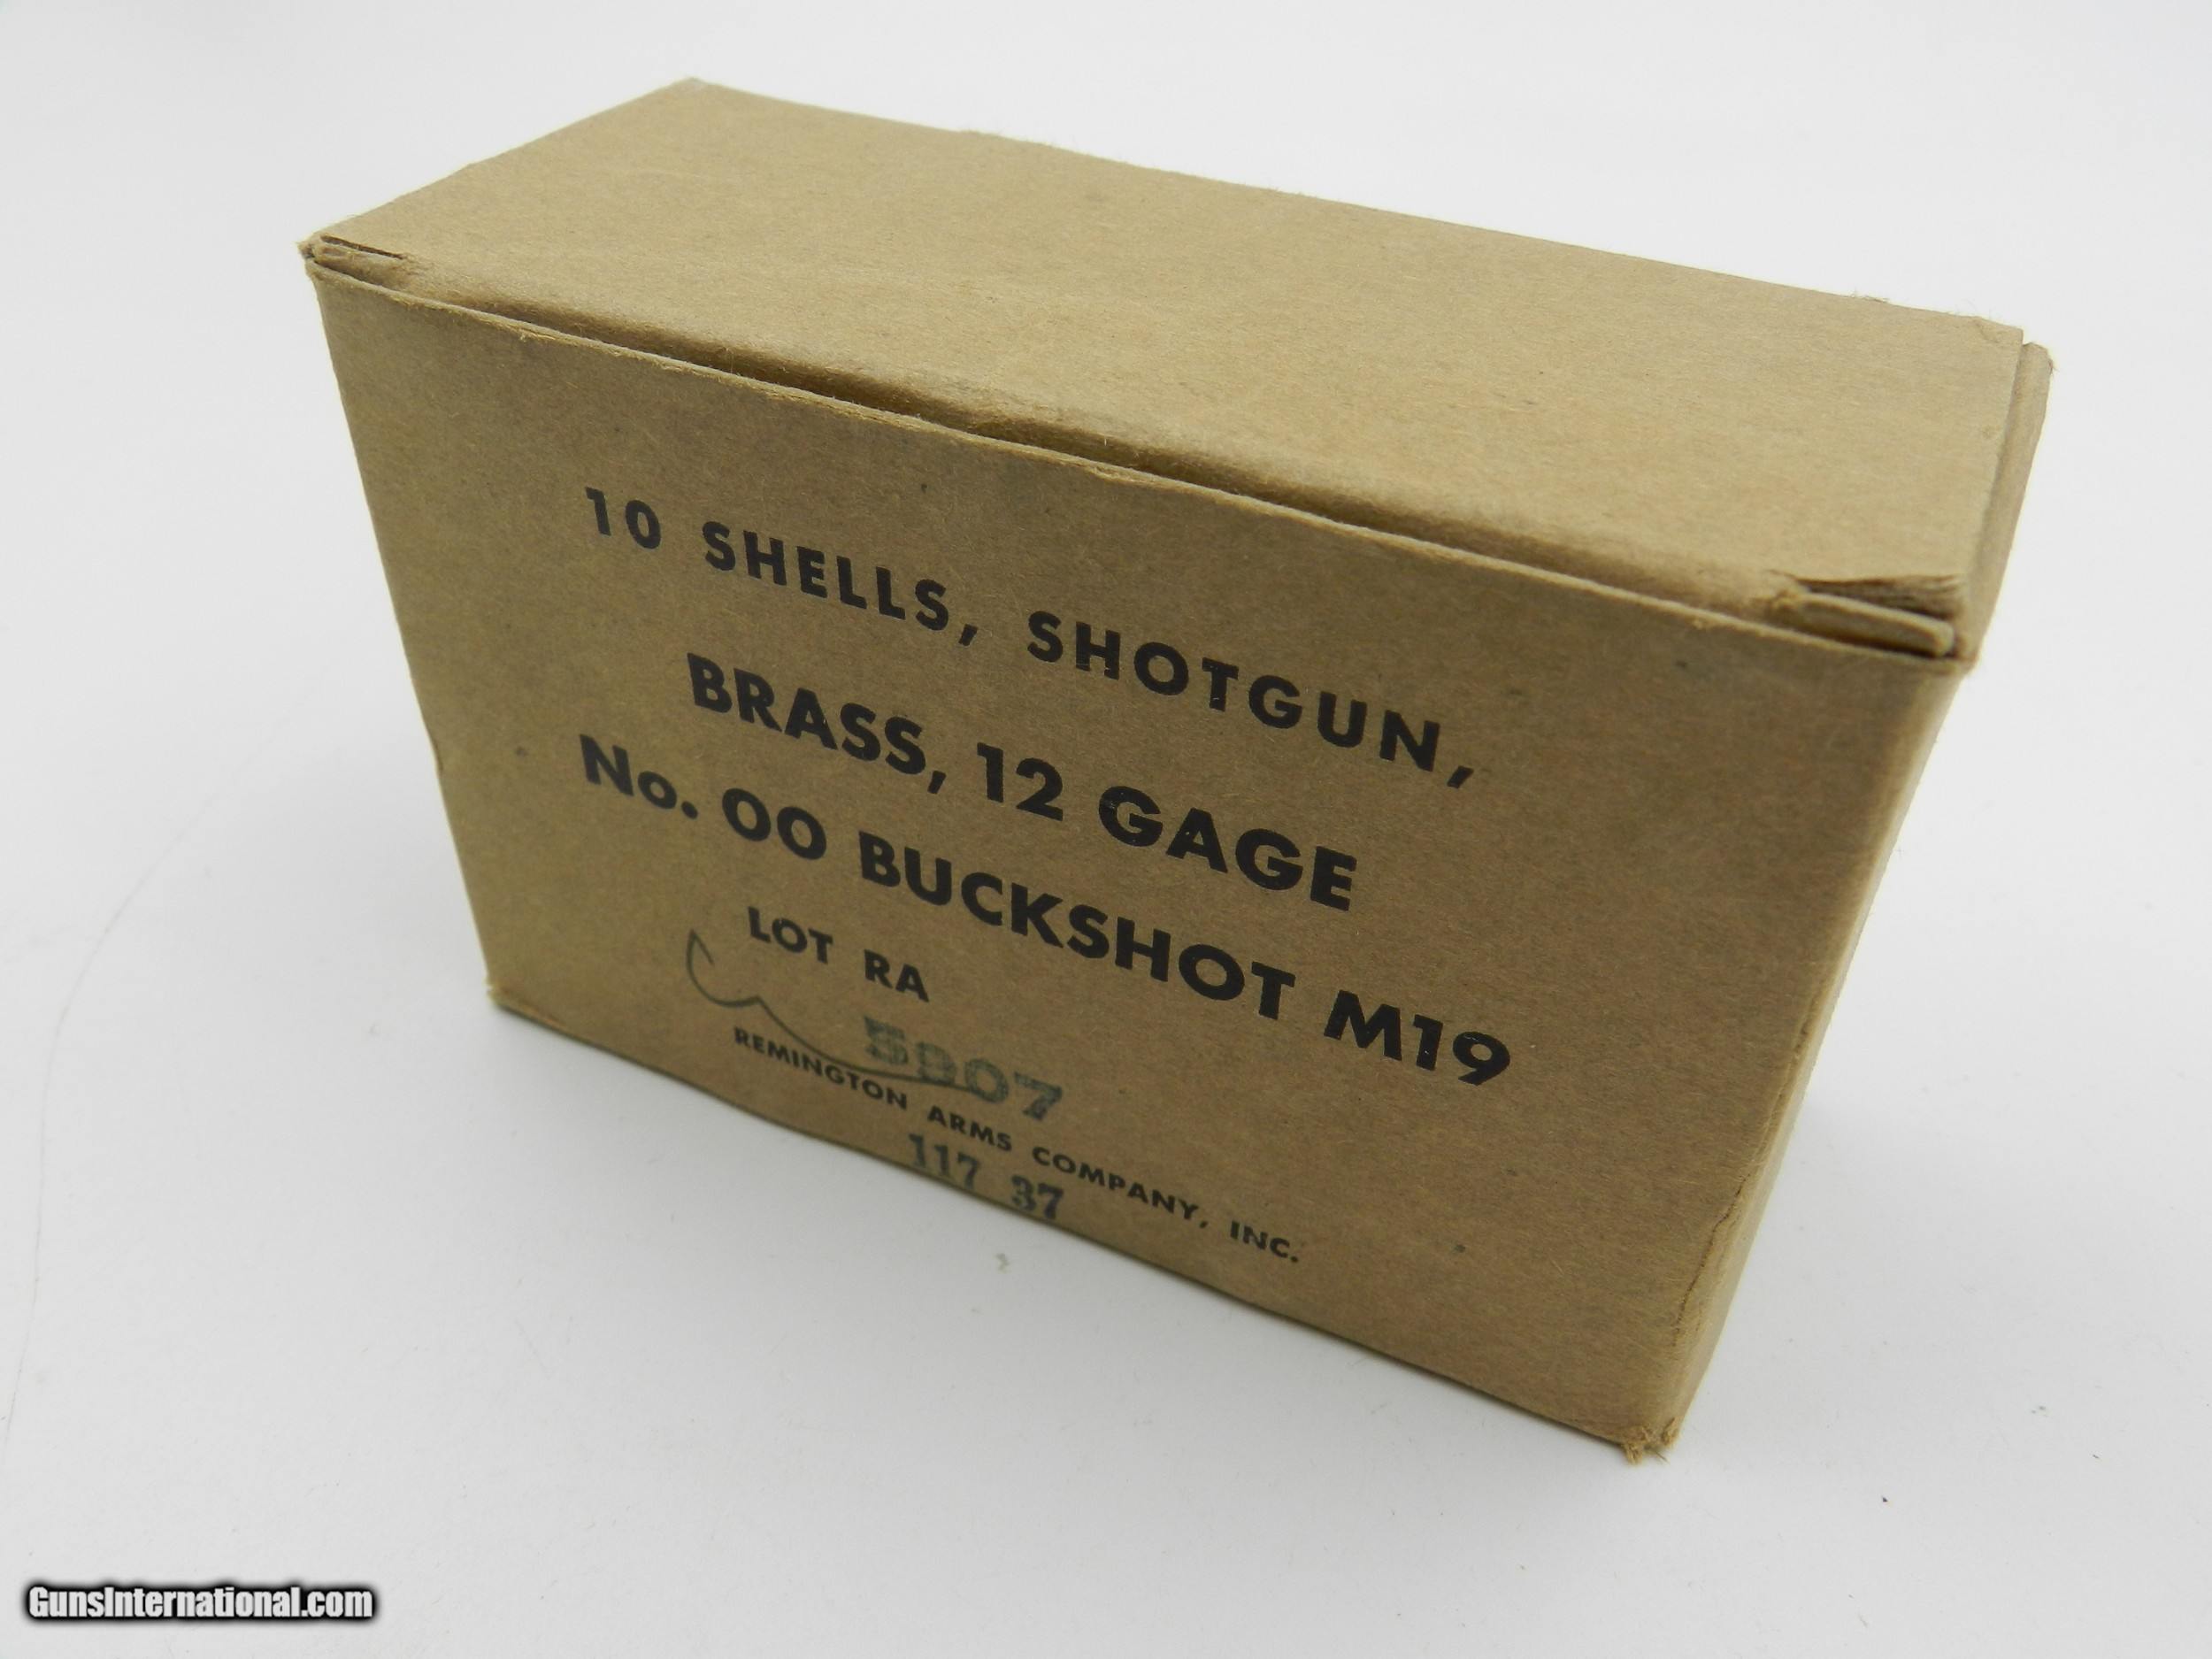 Four Bees: US Military, WW2 Shotgun Shot Shells, M19, Brass, 12